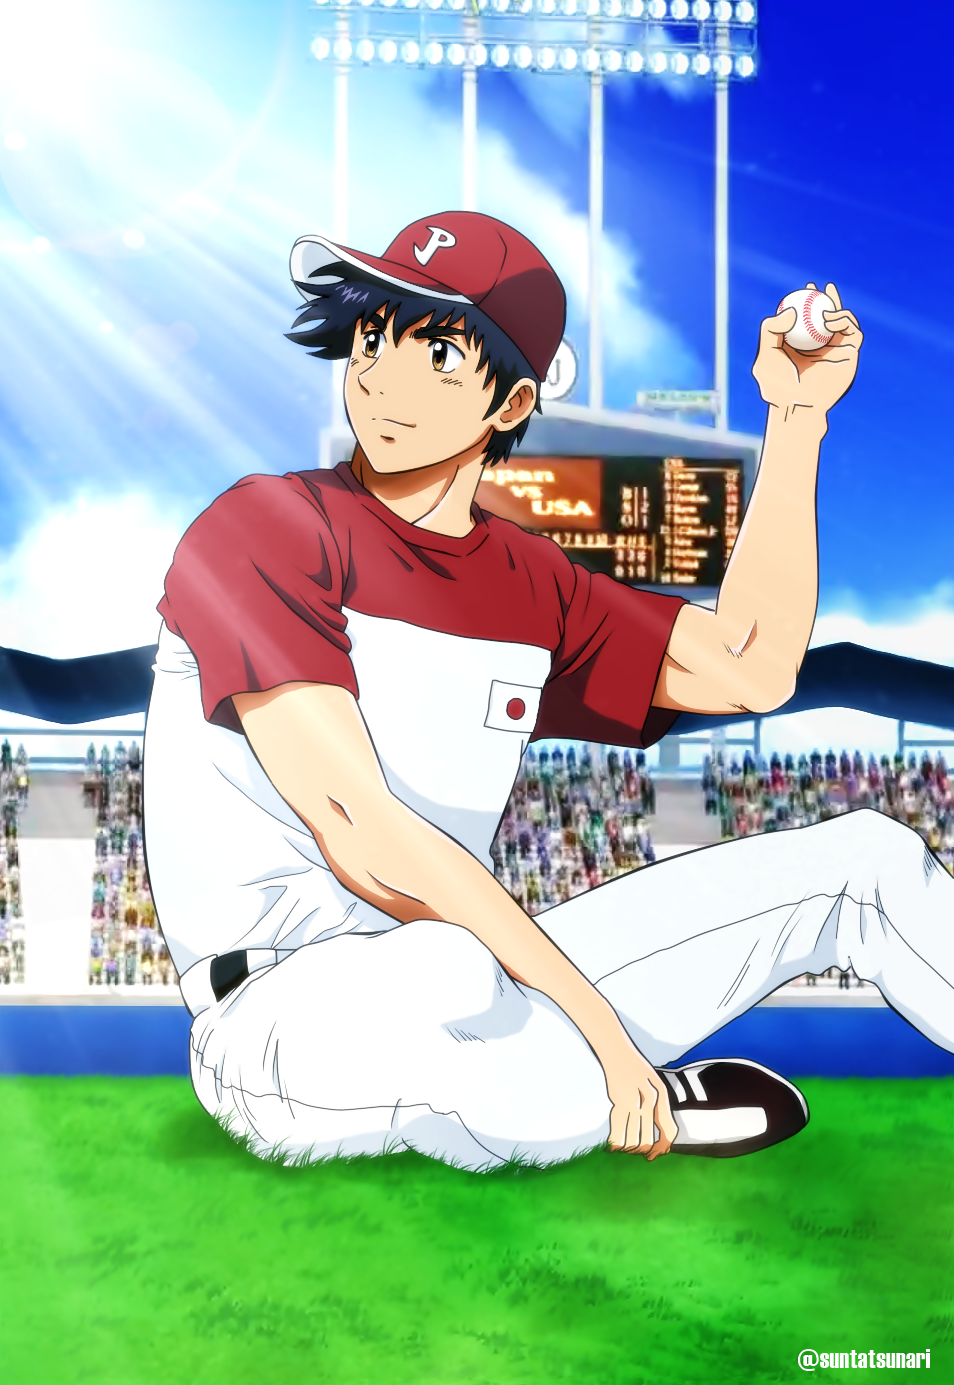 Pin by Giovanna on Major  Baseball anime, Major baseball, Sports anime